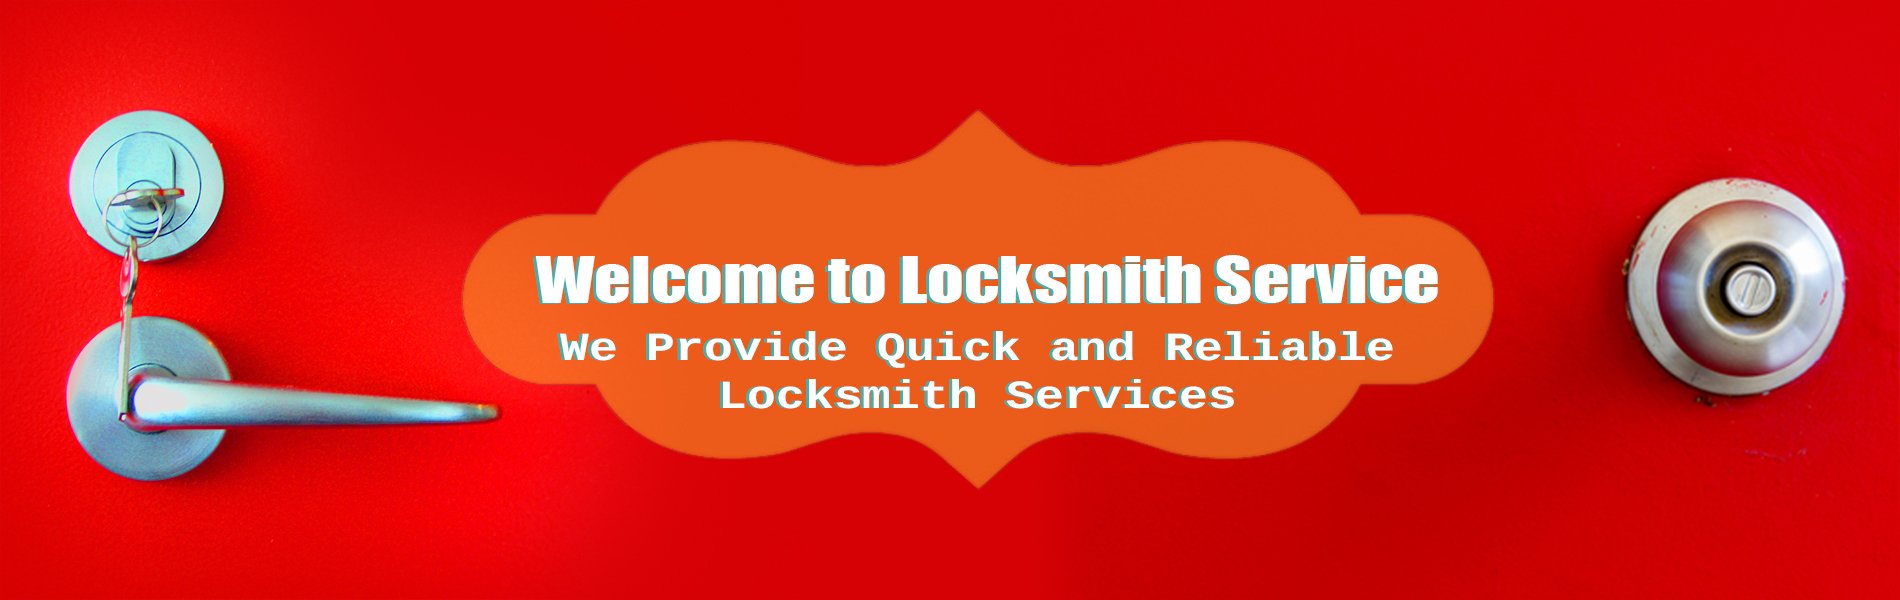 Town Center Locksmith Shop Greensboro, NC 336-443-0775